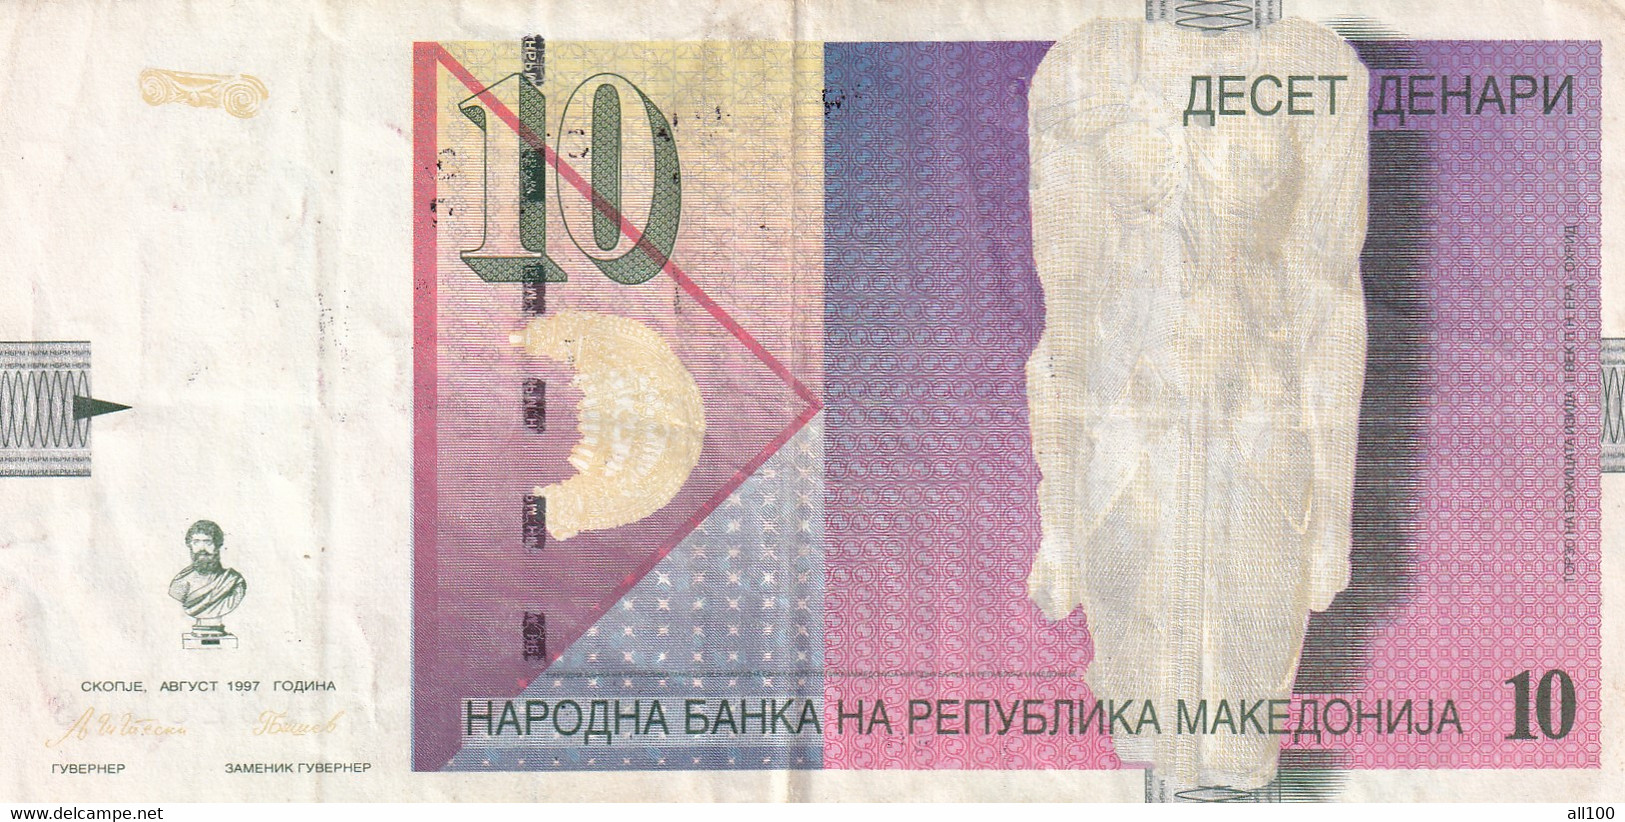 10 DENAR DECET DENARS TEN DENARS MACEDONIA 1997 NATIONAL BANK OF THE REPUBLIC OF MACEDONIA 626808 - Nordmazedonien